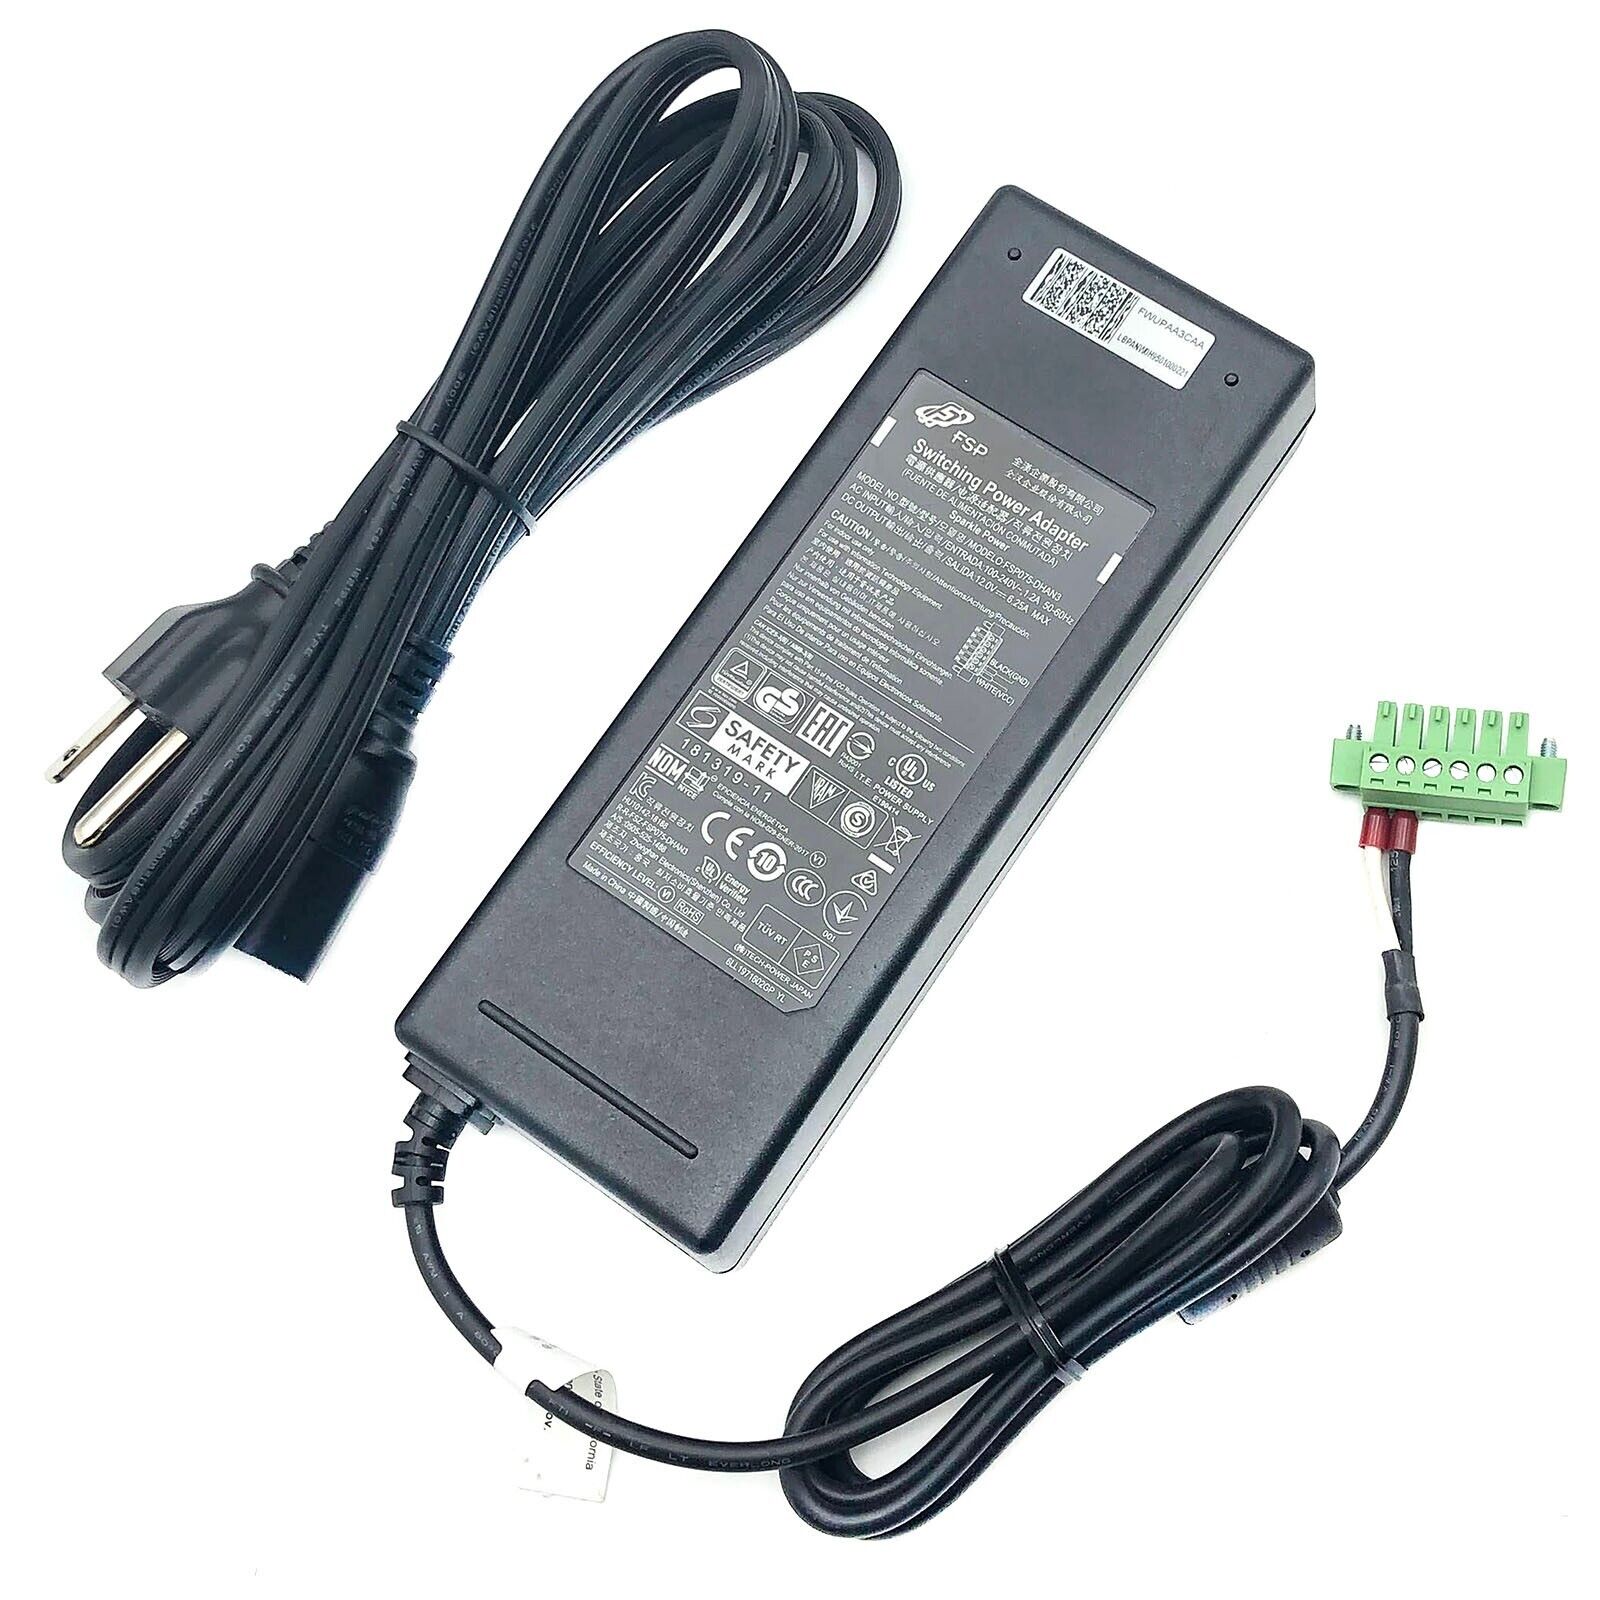 *Brand NEW*Original FSP FSP075-DHAN3 12V 6.25A 75W AC Adapter Terminal Block Connector Power Supply